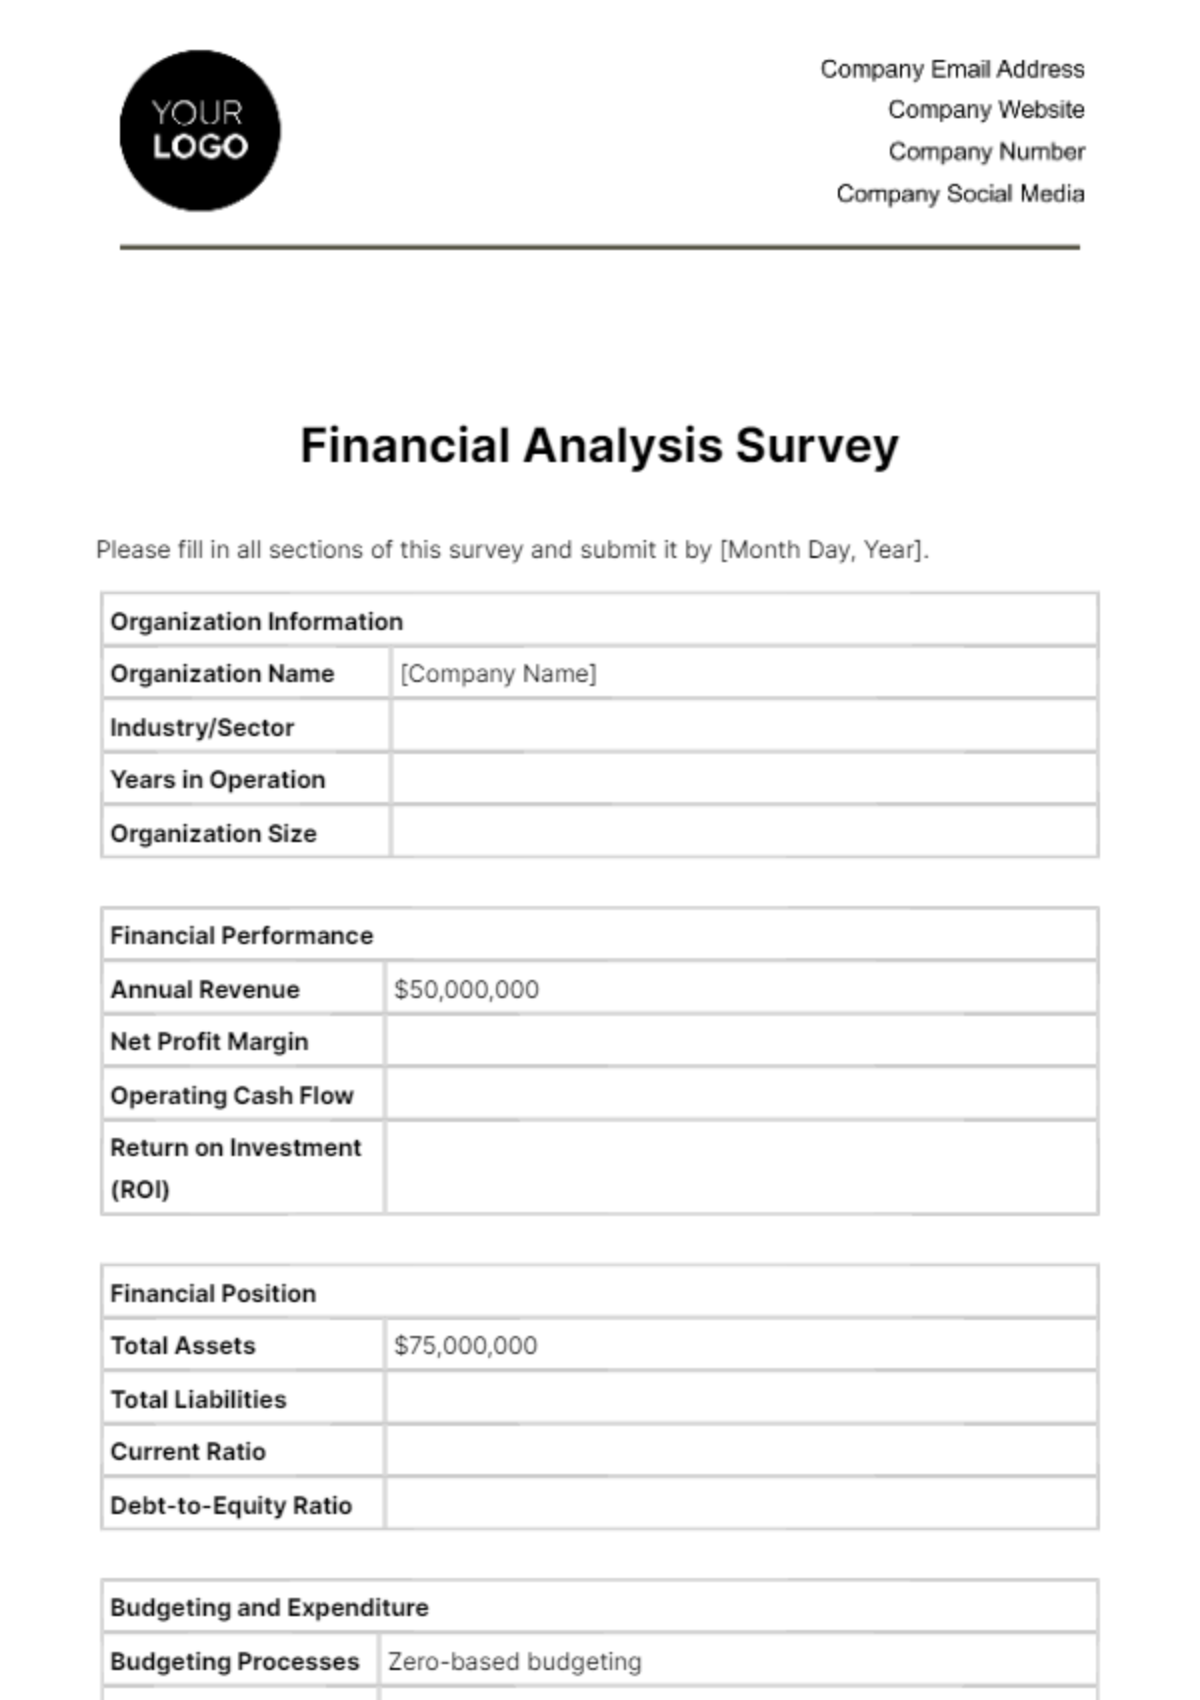 Free Financial Analysis Survey Template